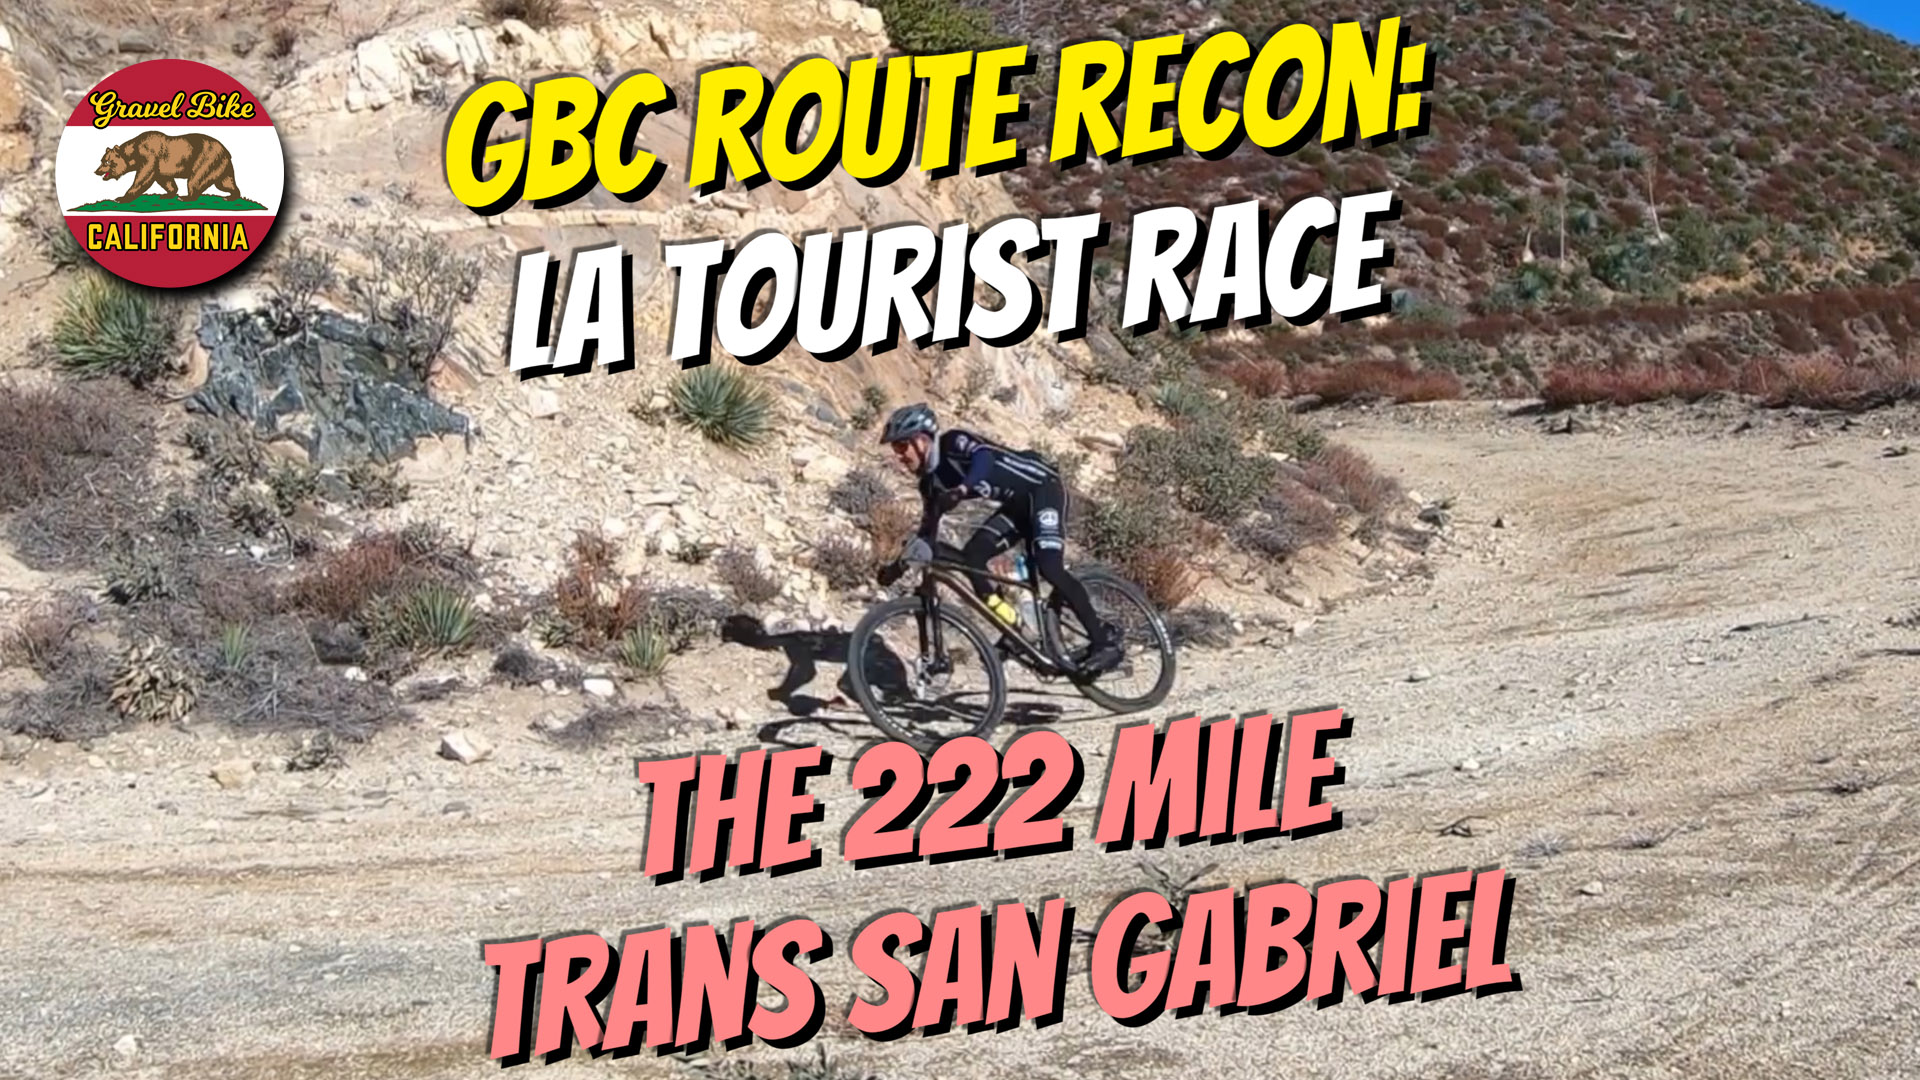 LA Tourist Race Recon 222 Mile Trans San Gabriel Gravel Bike